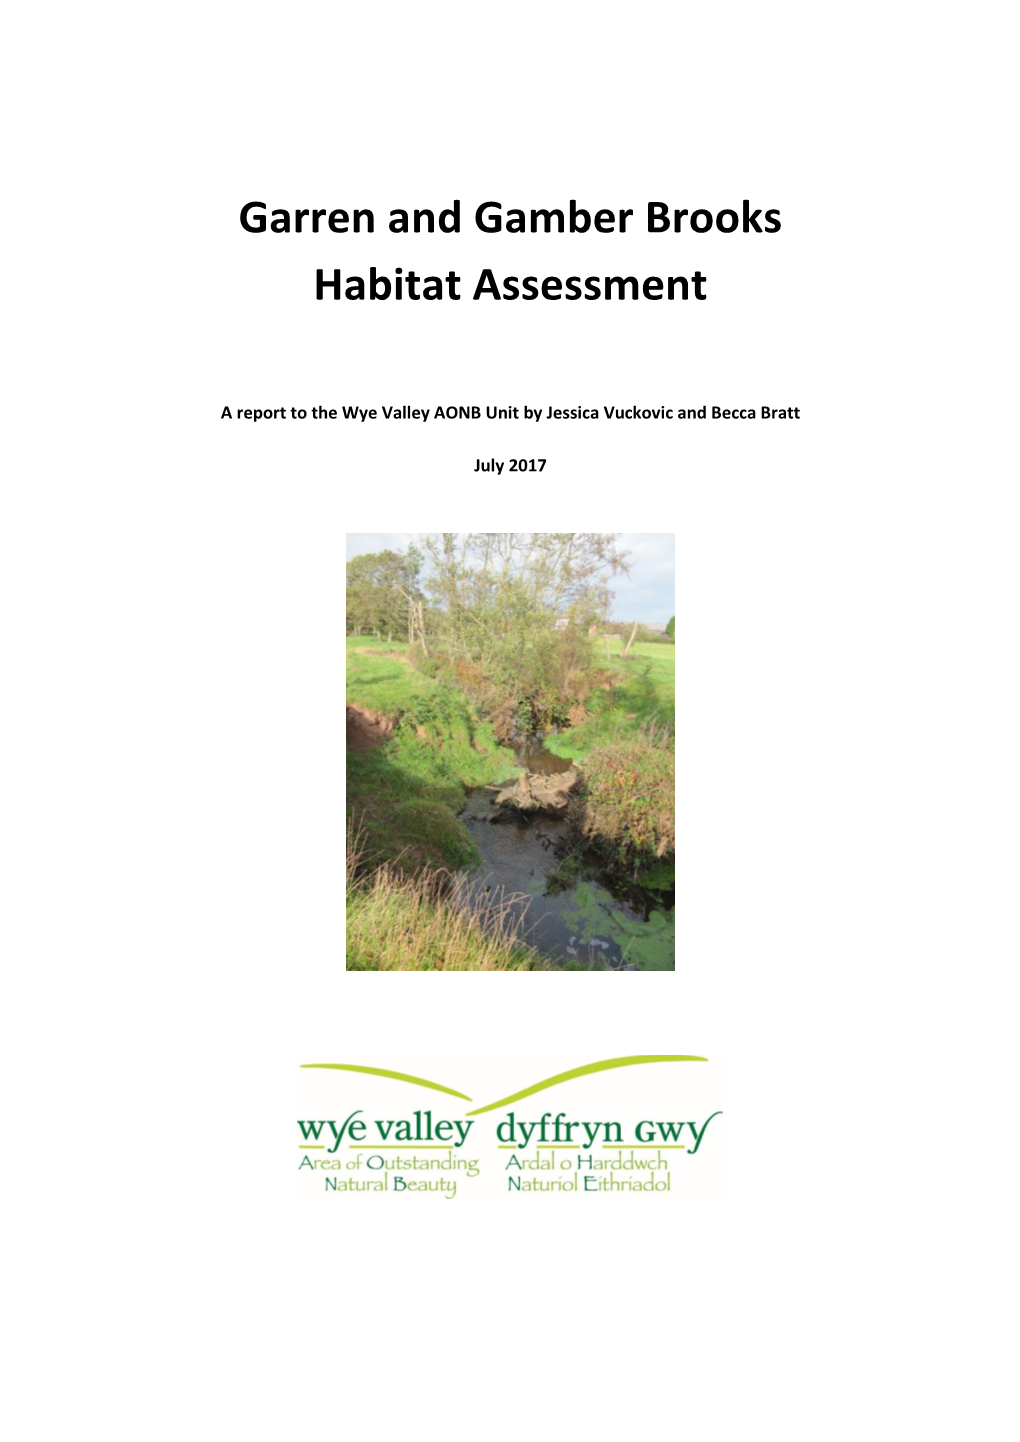 Garren and Gamber Brooks Habitat Assessment